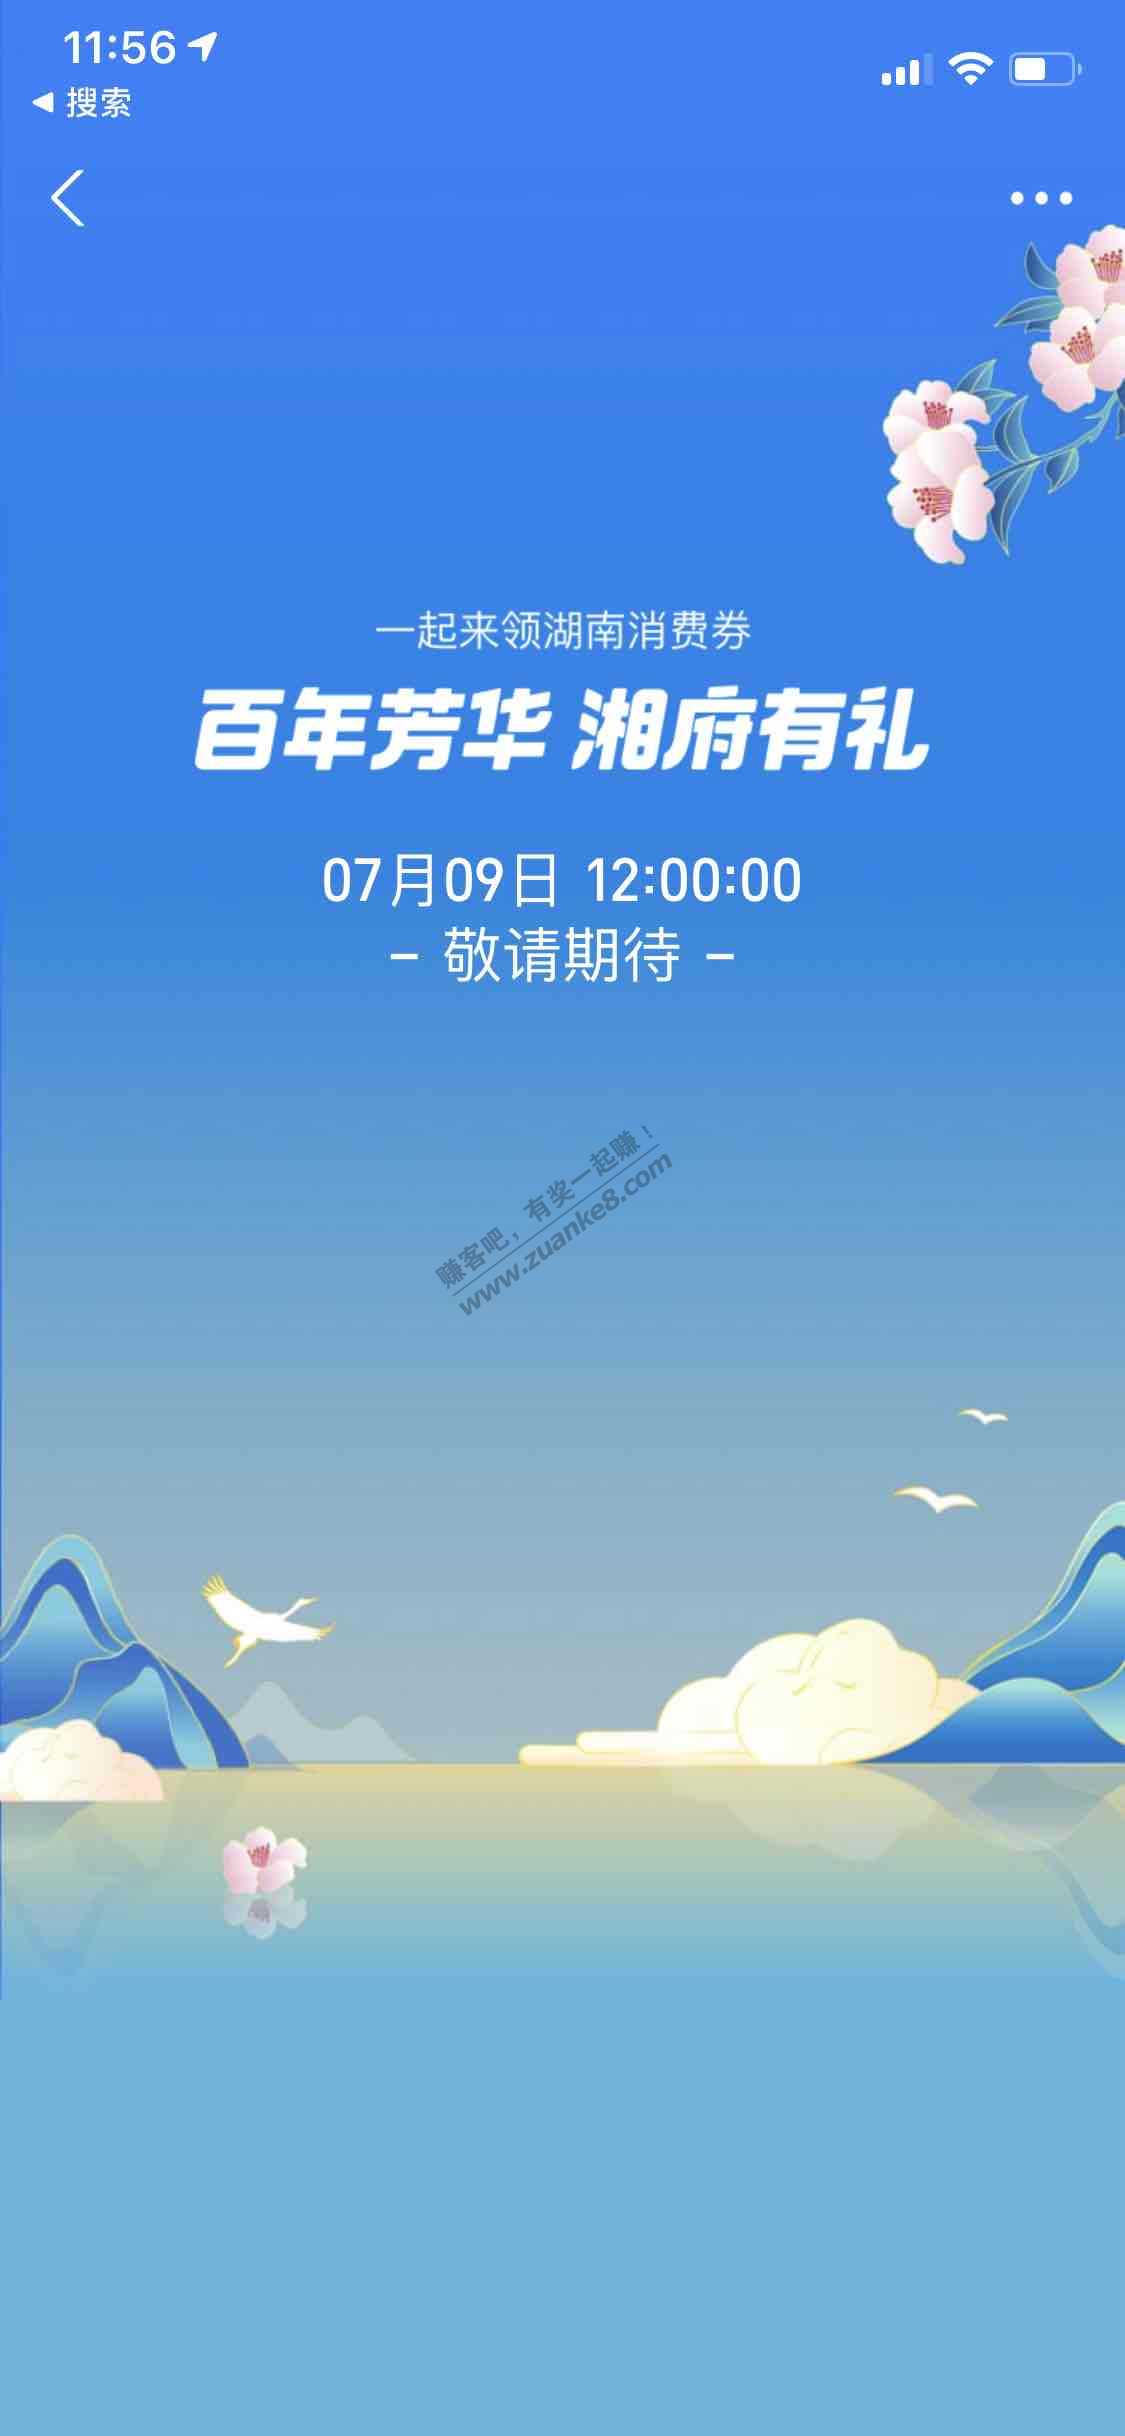 zfb湖南消费券加场了-惠小助(52huixz.com)